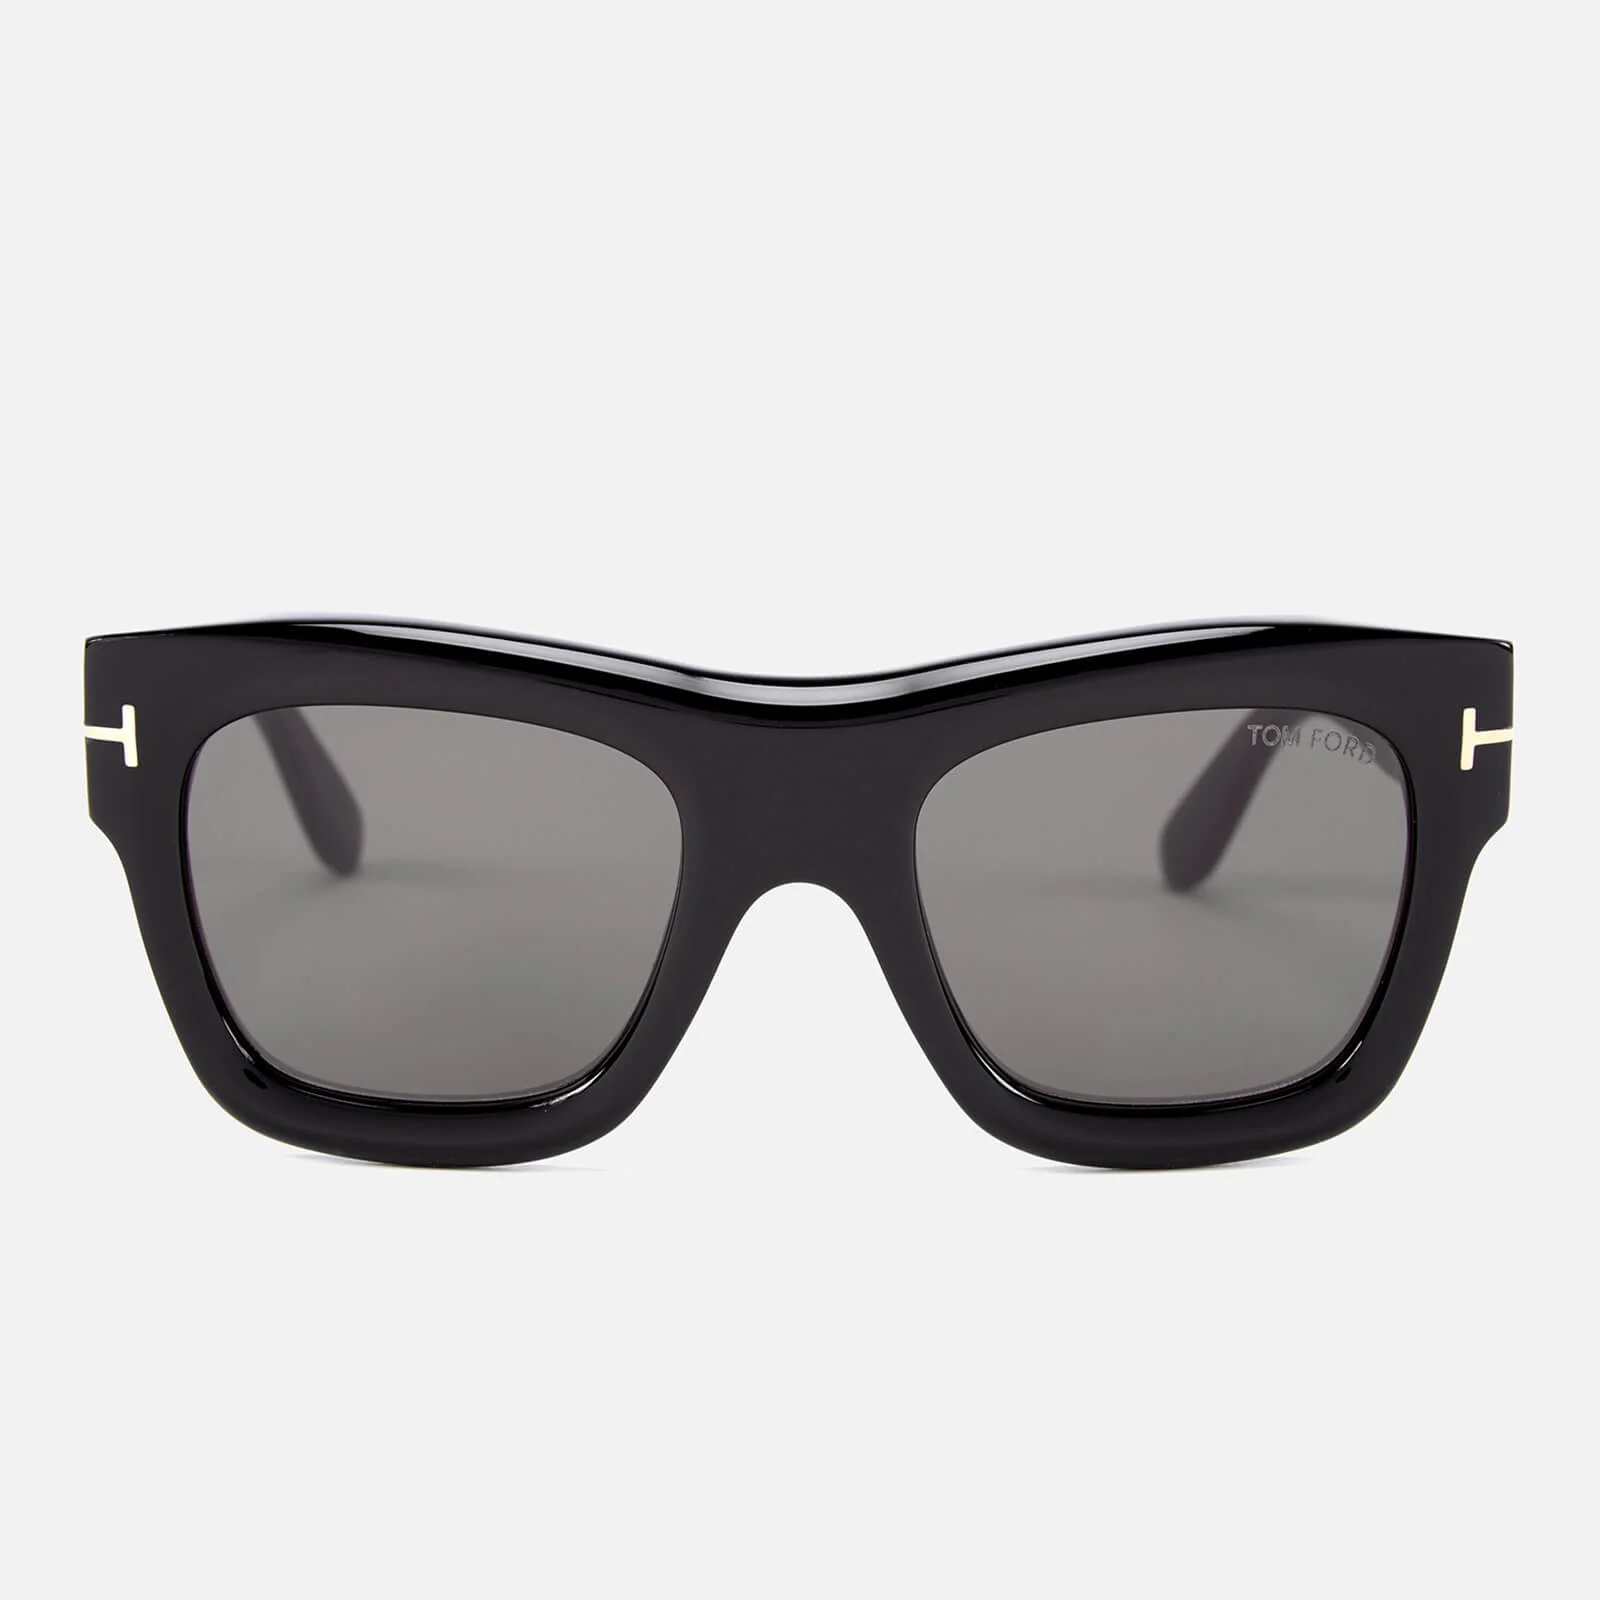 Tom Ford Men's Wagner Sunglasses - Shiny Black/Smoke Image 1